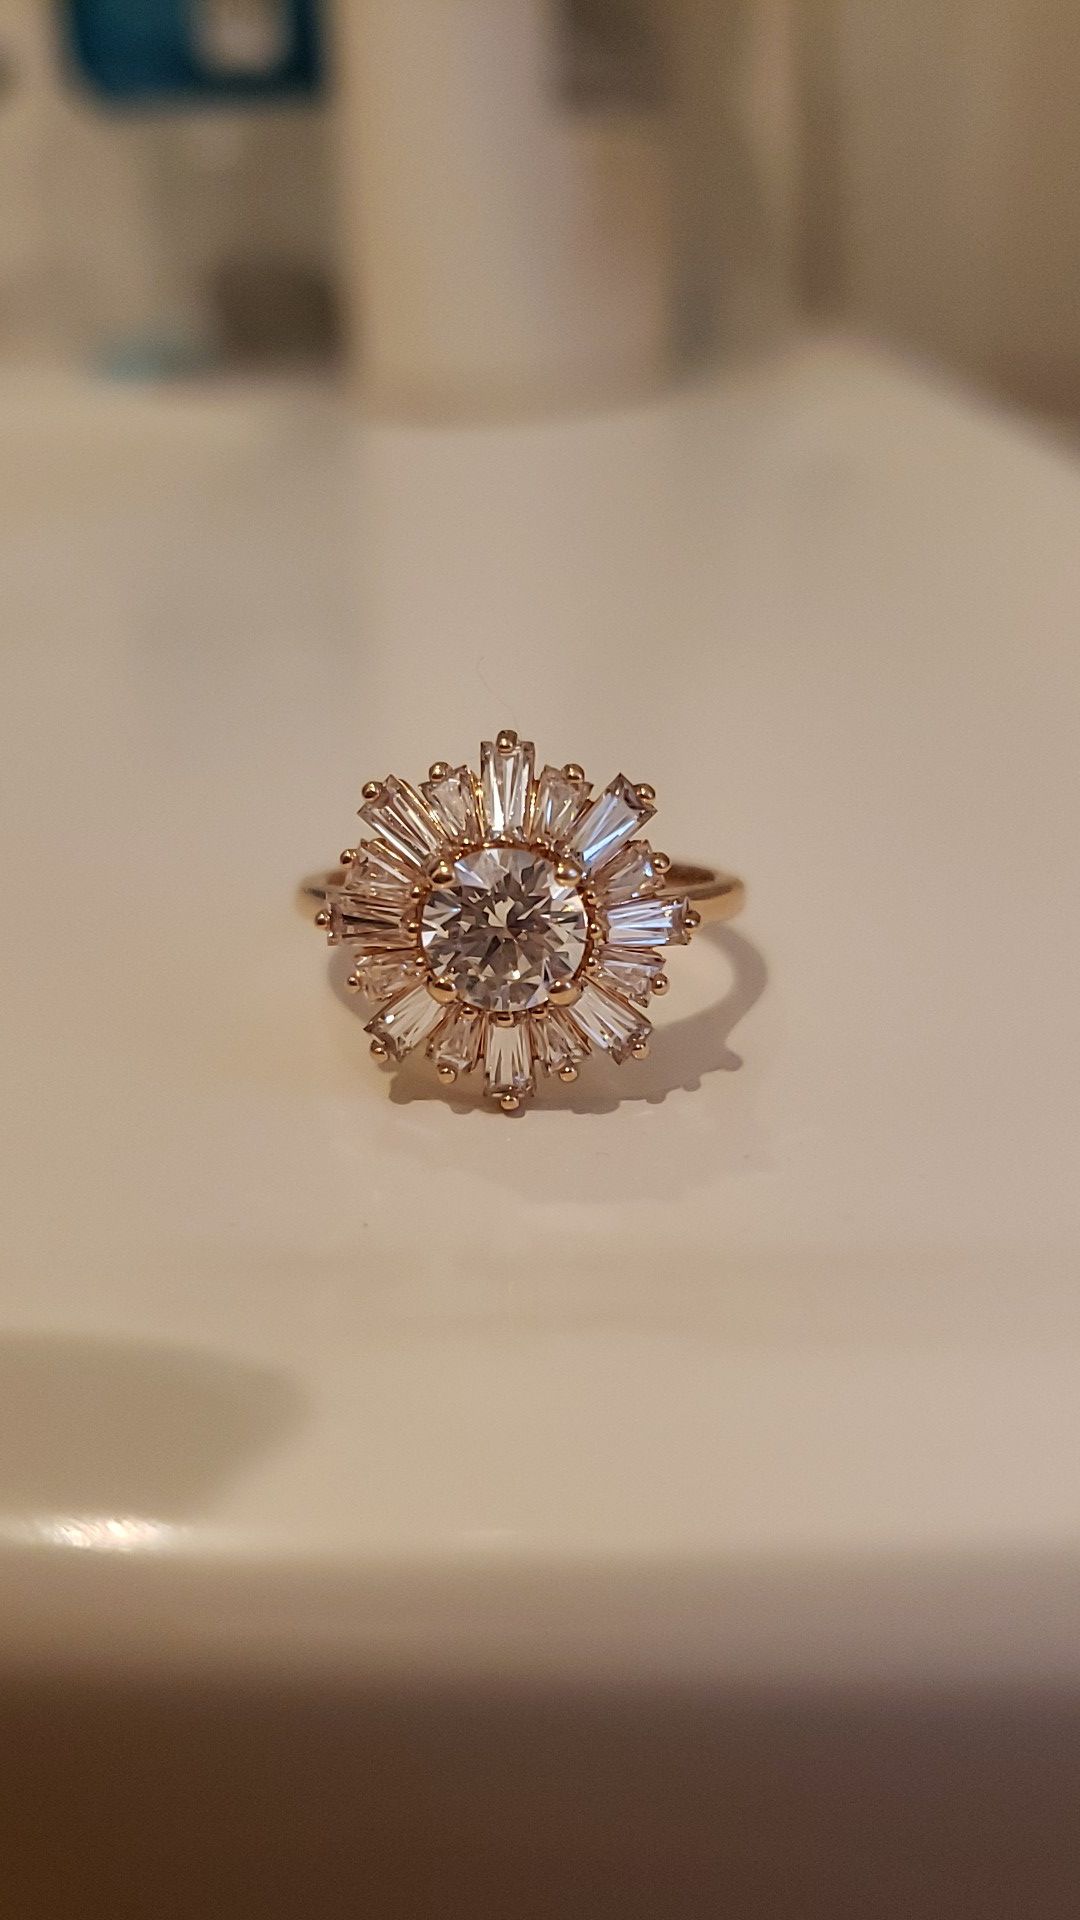 Swarovski Ring (Size 7) Rose gold plated